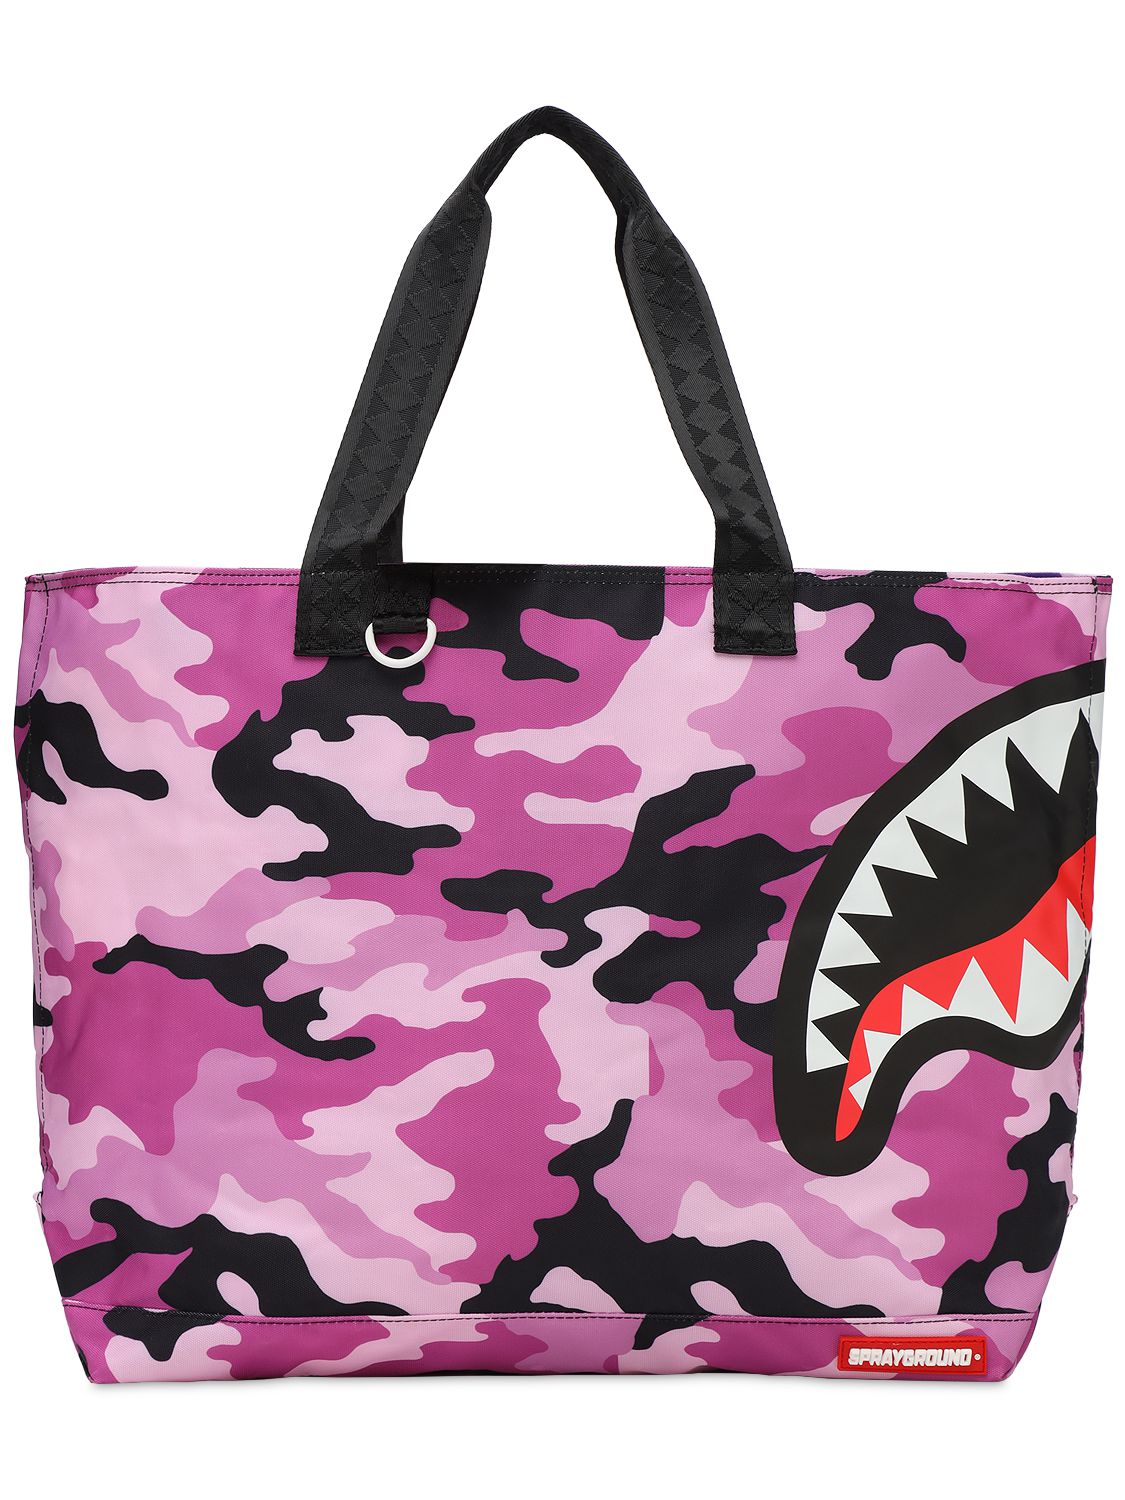 Sprayground Split Camo Beach Tote Bag In Pink,multi